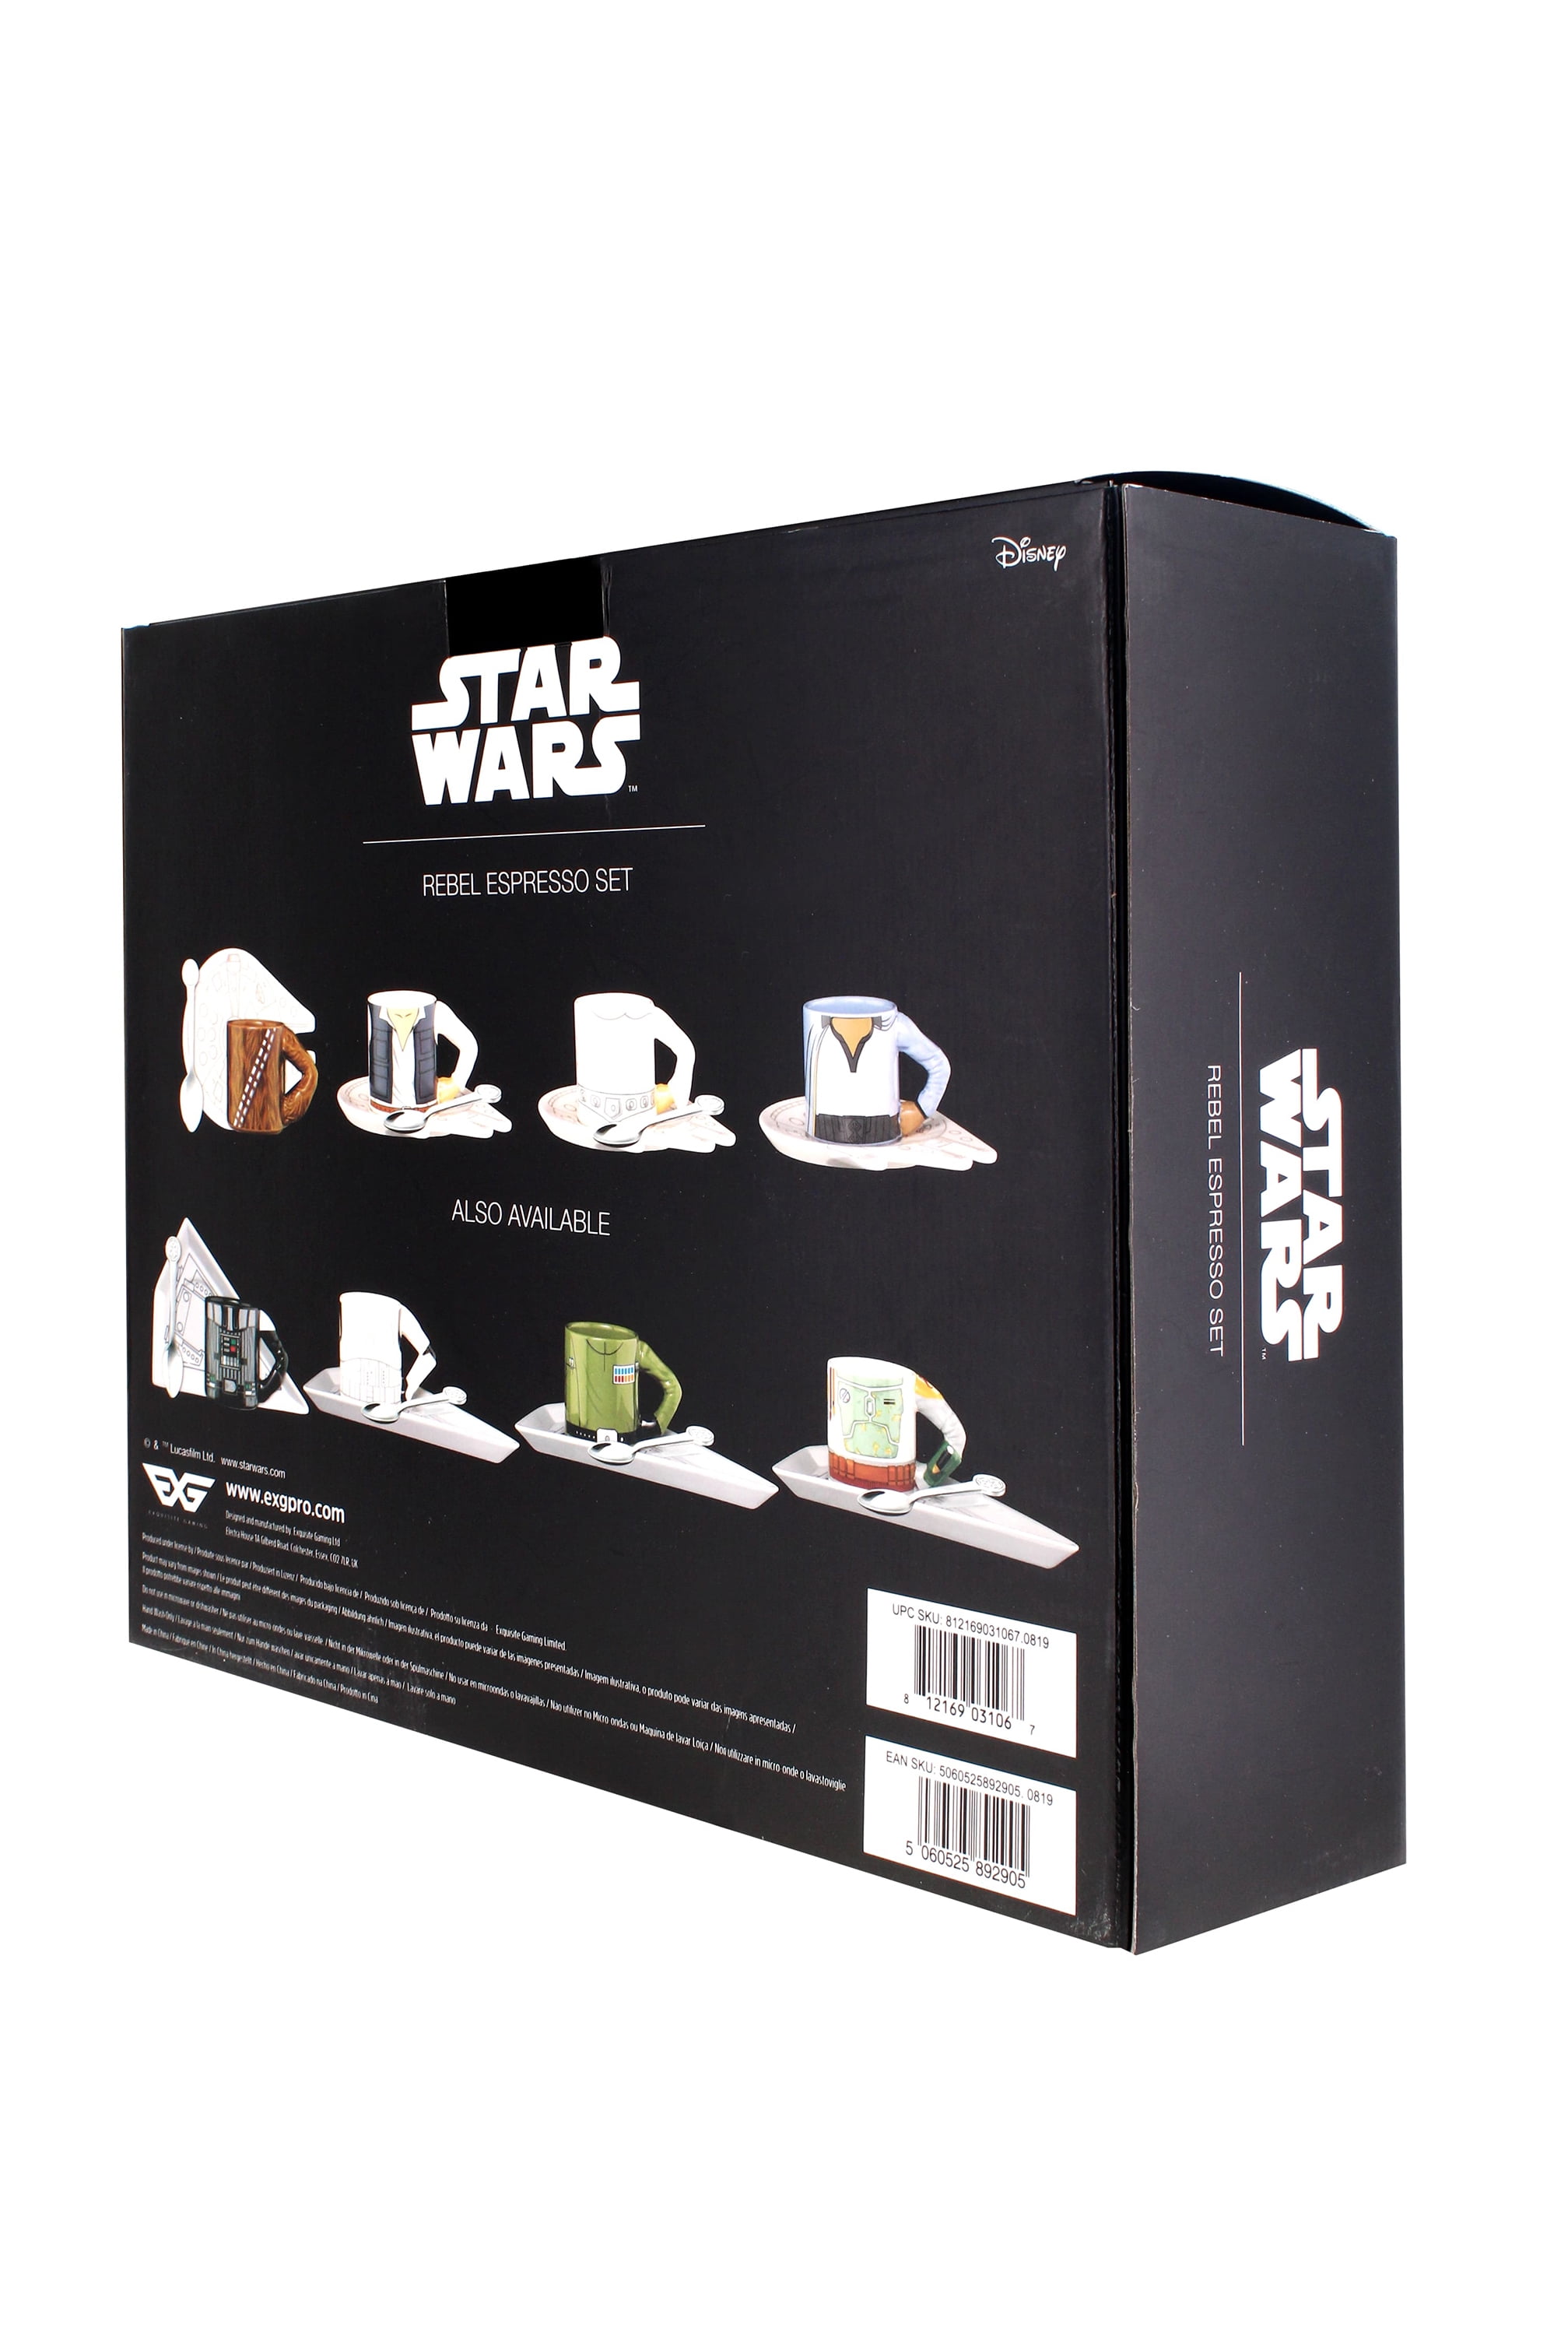 Exquisite Gaming - Star Wars 4-Pack Deluxe Espresso Set, Rebels 